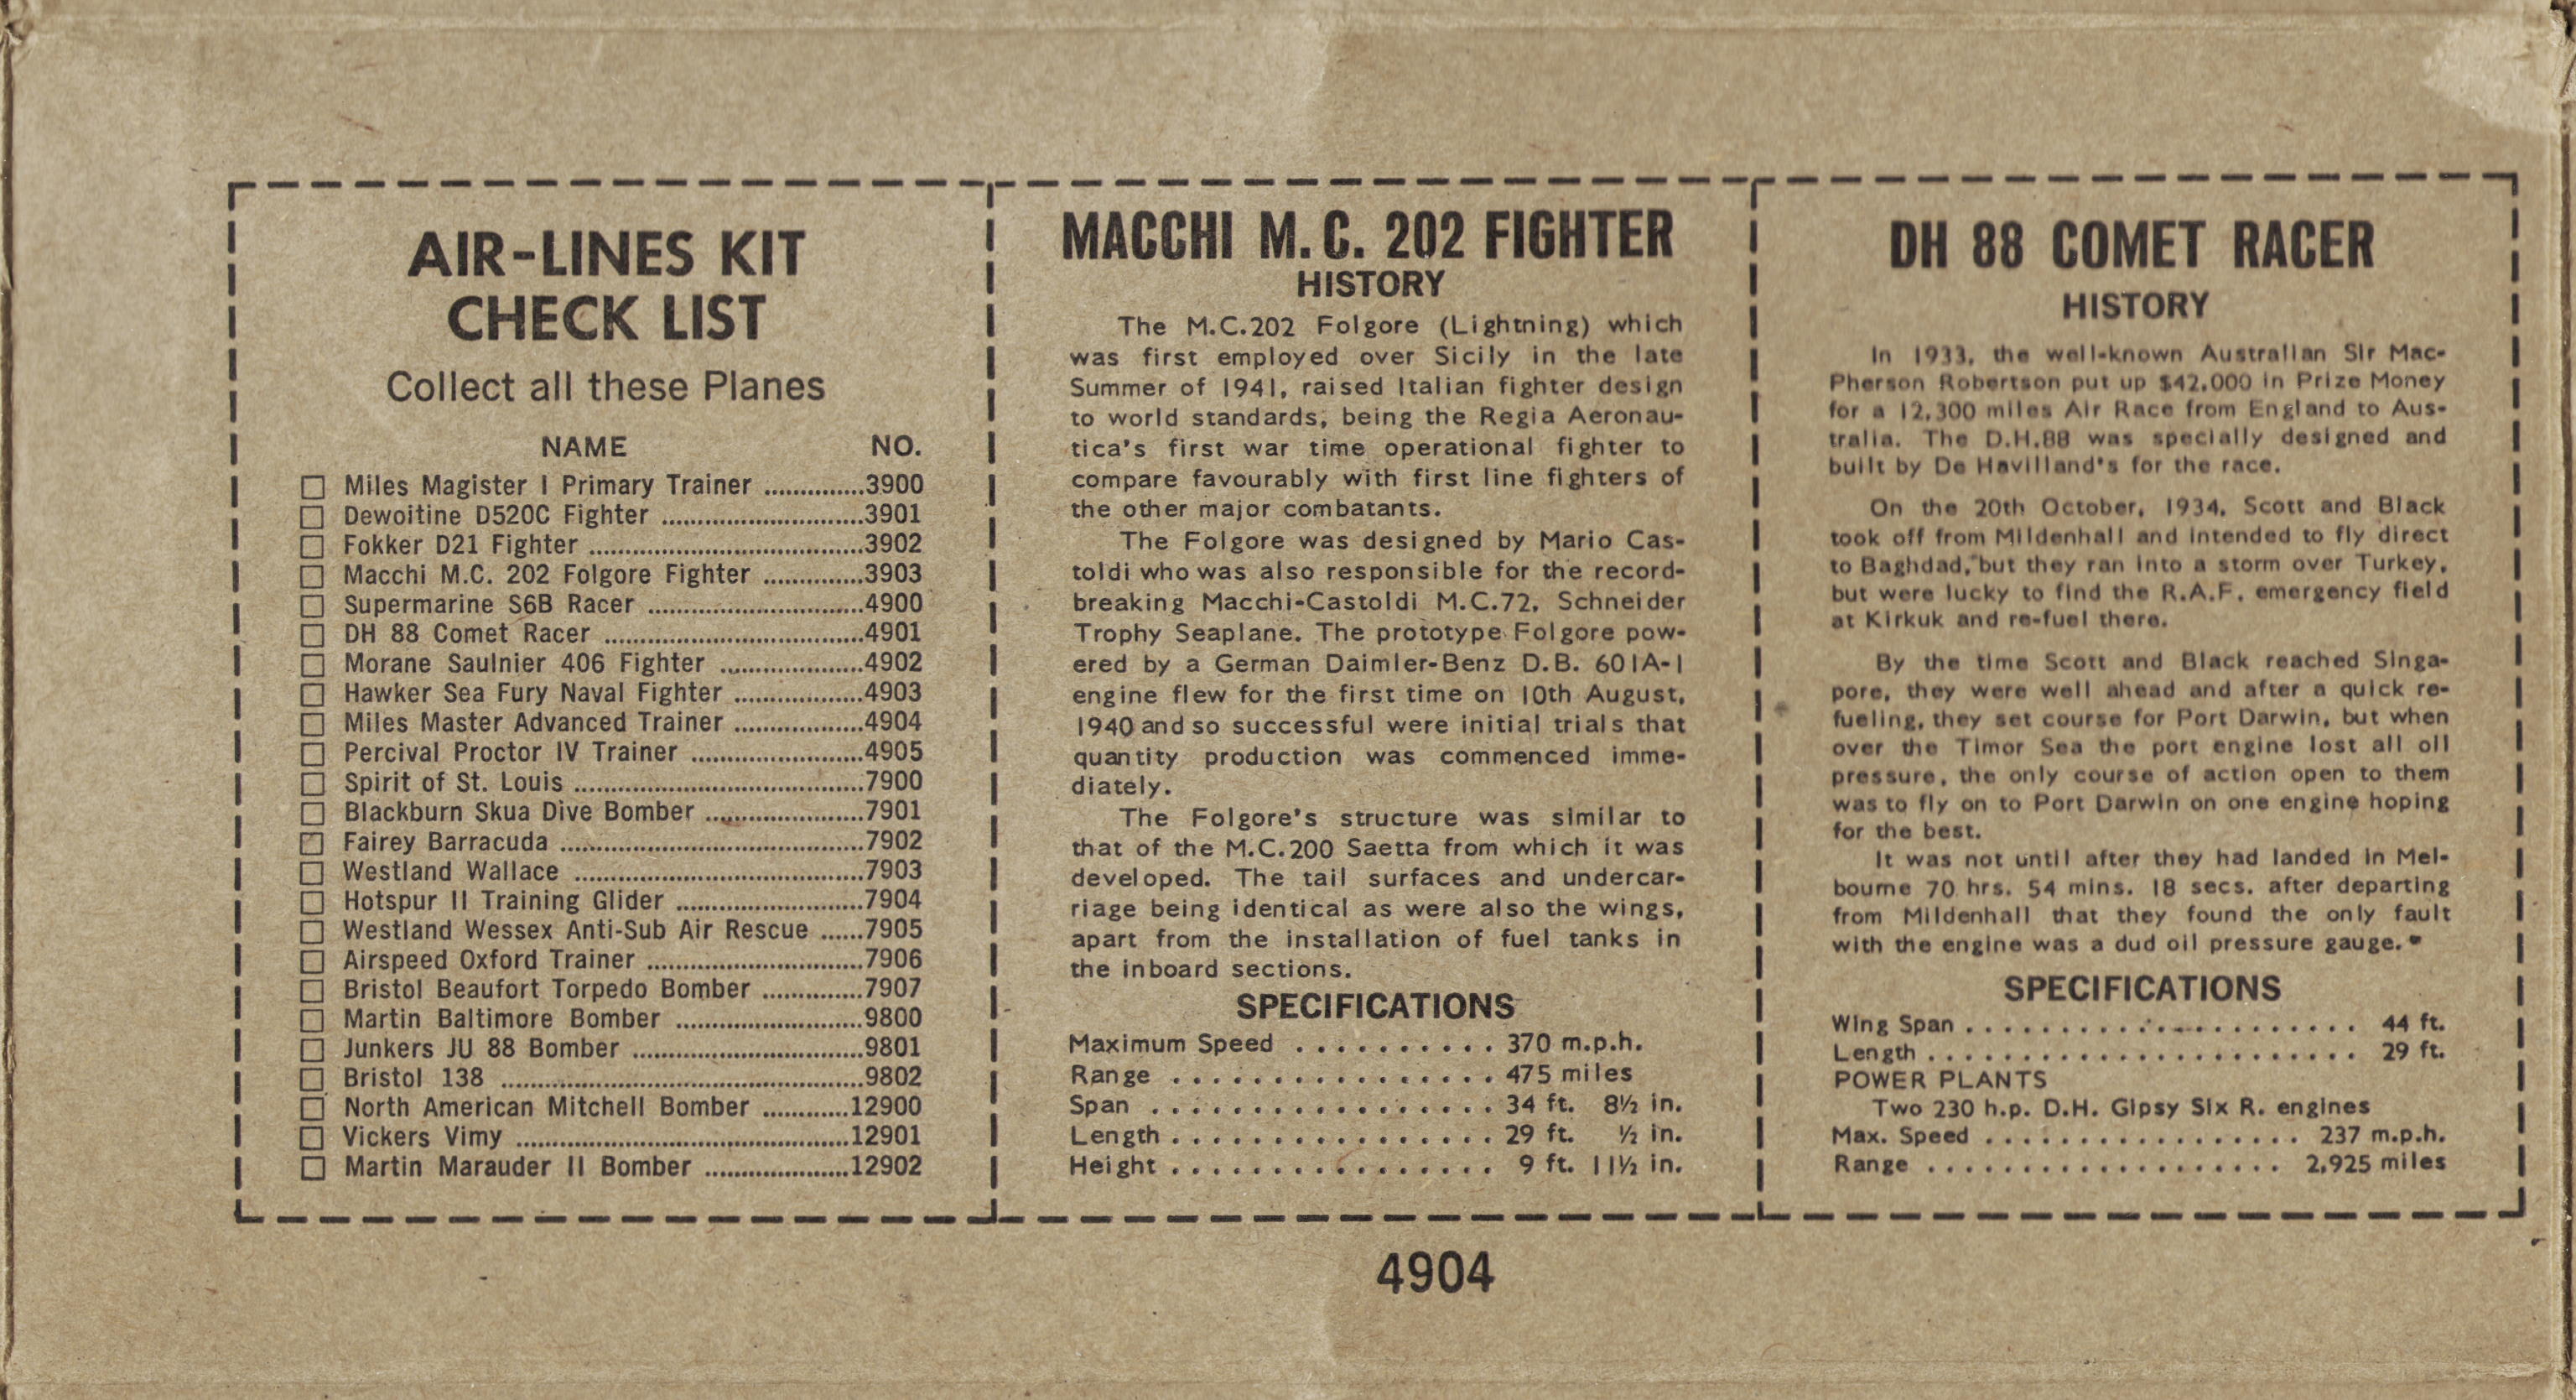 4904 Air Lines Miles Master, коробка, 1964